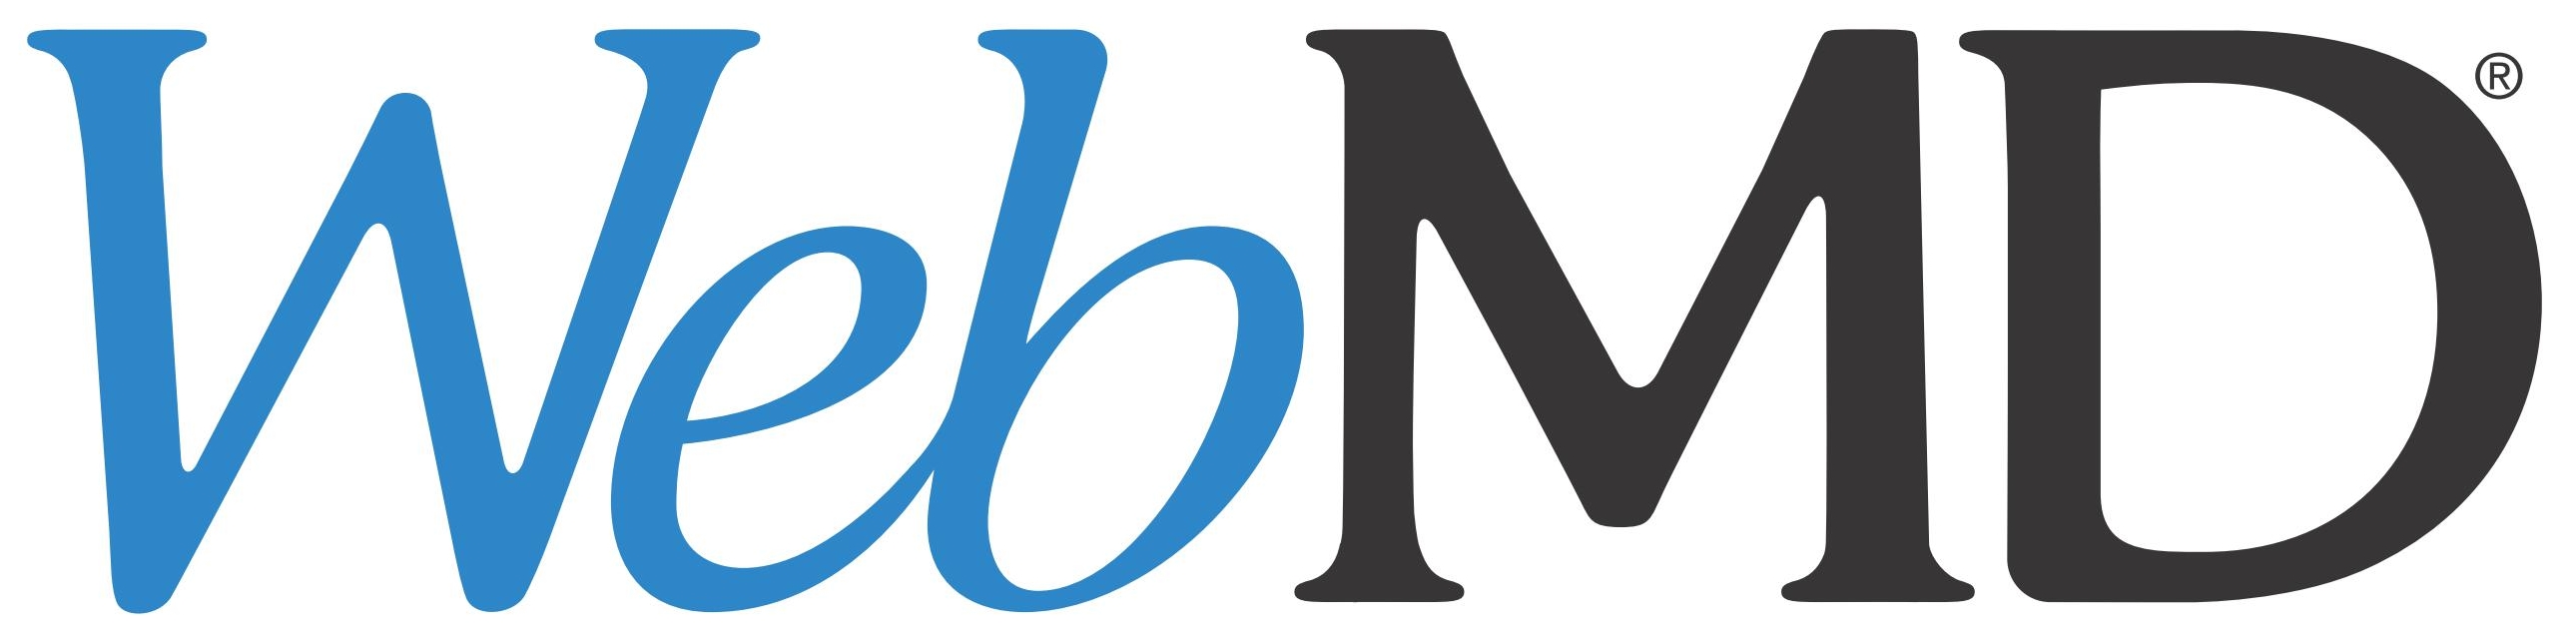 webmd-logo